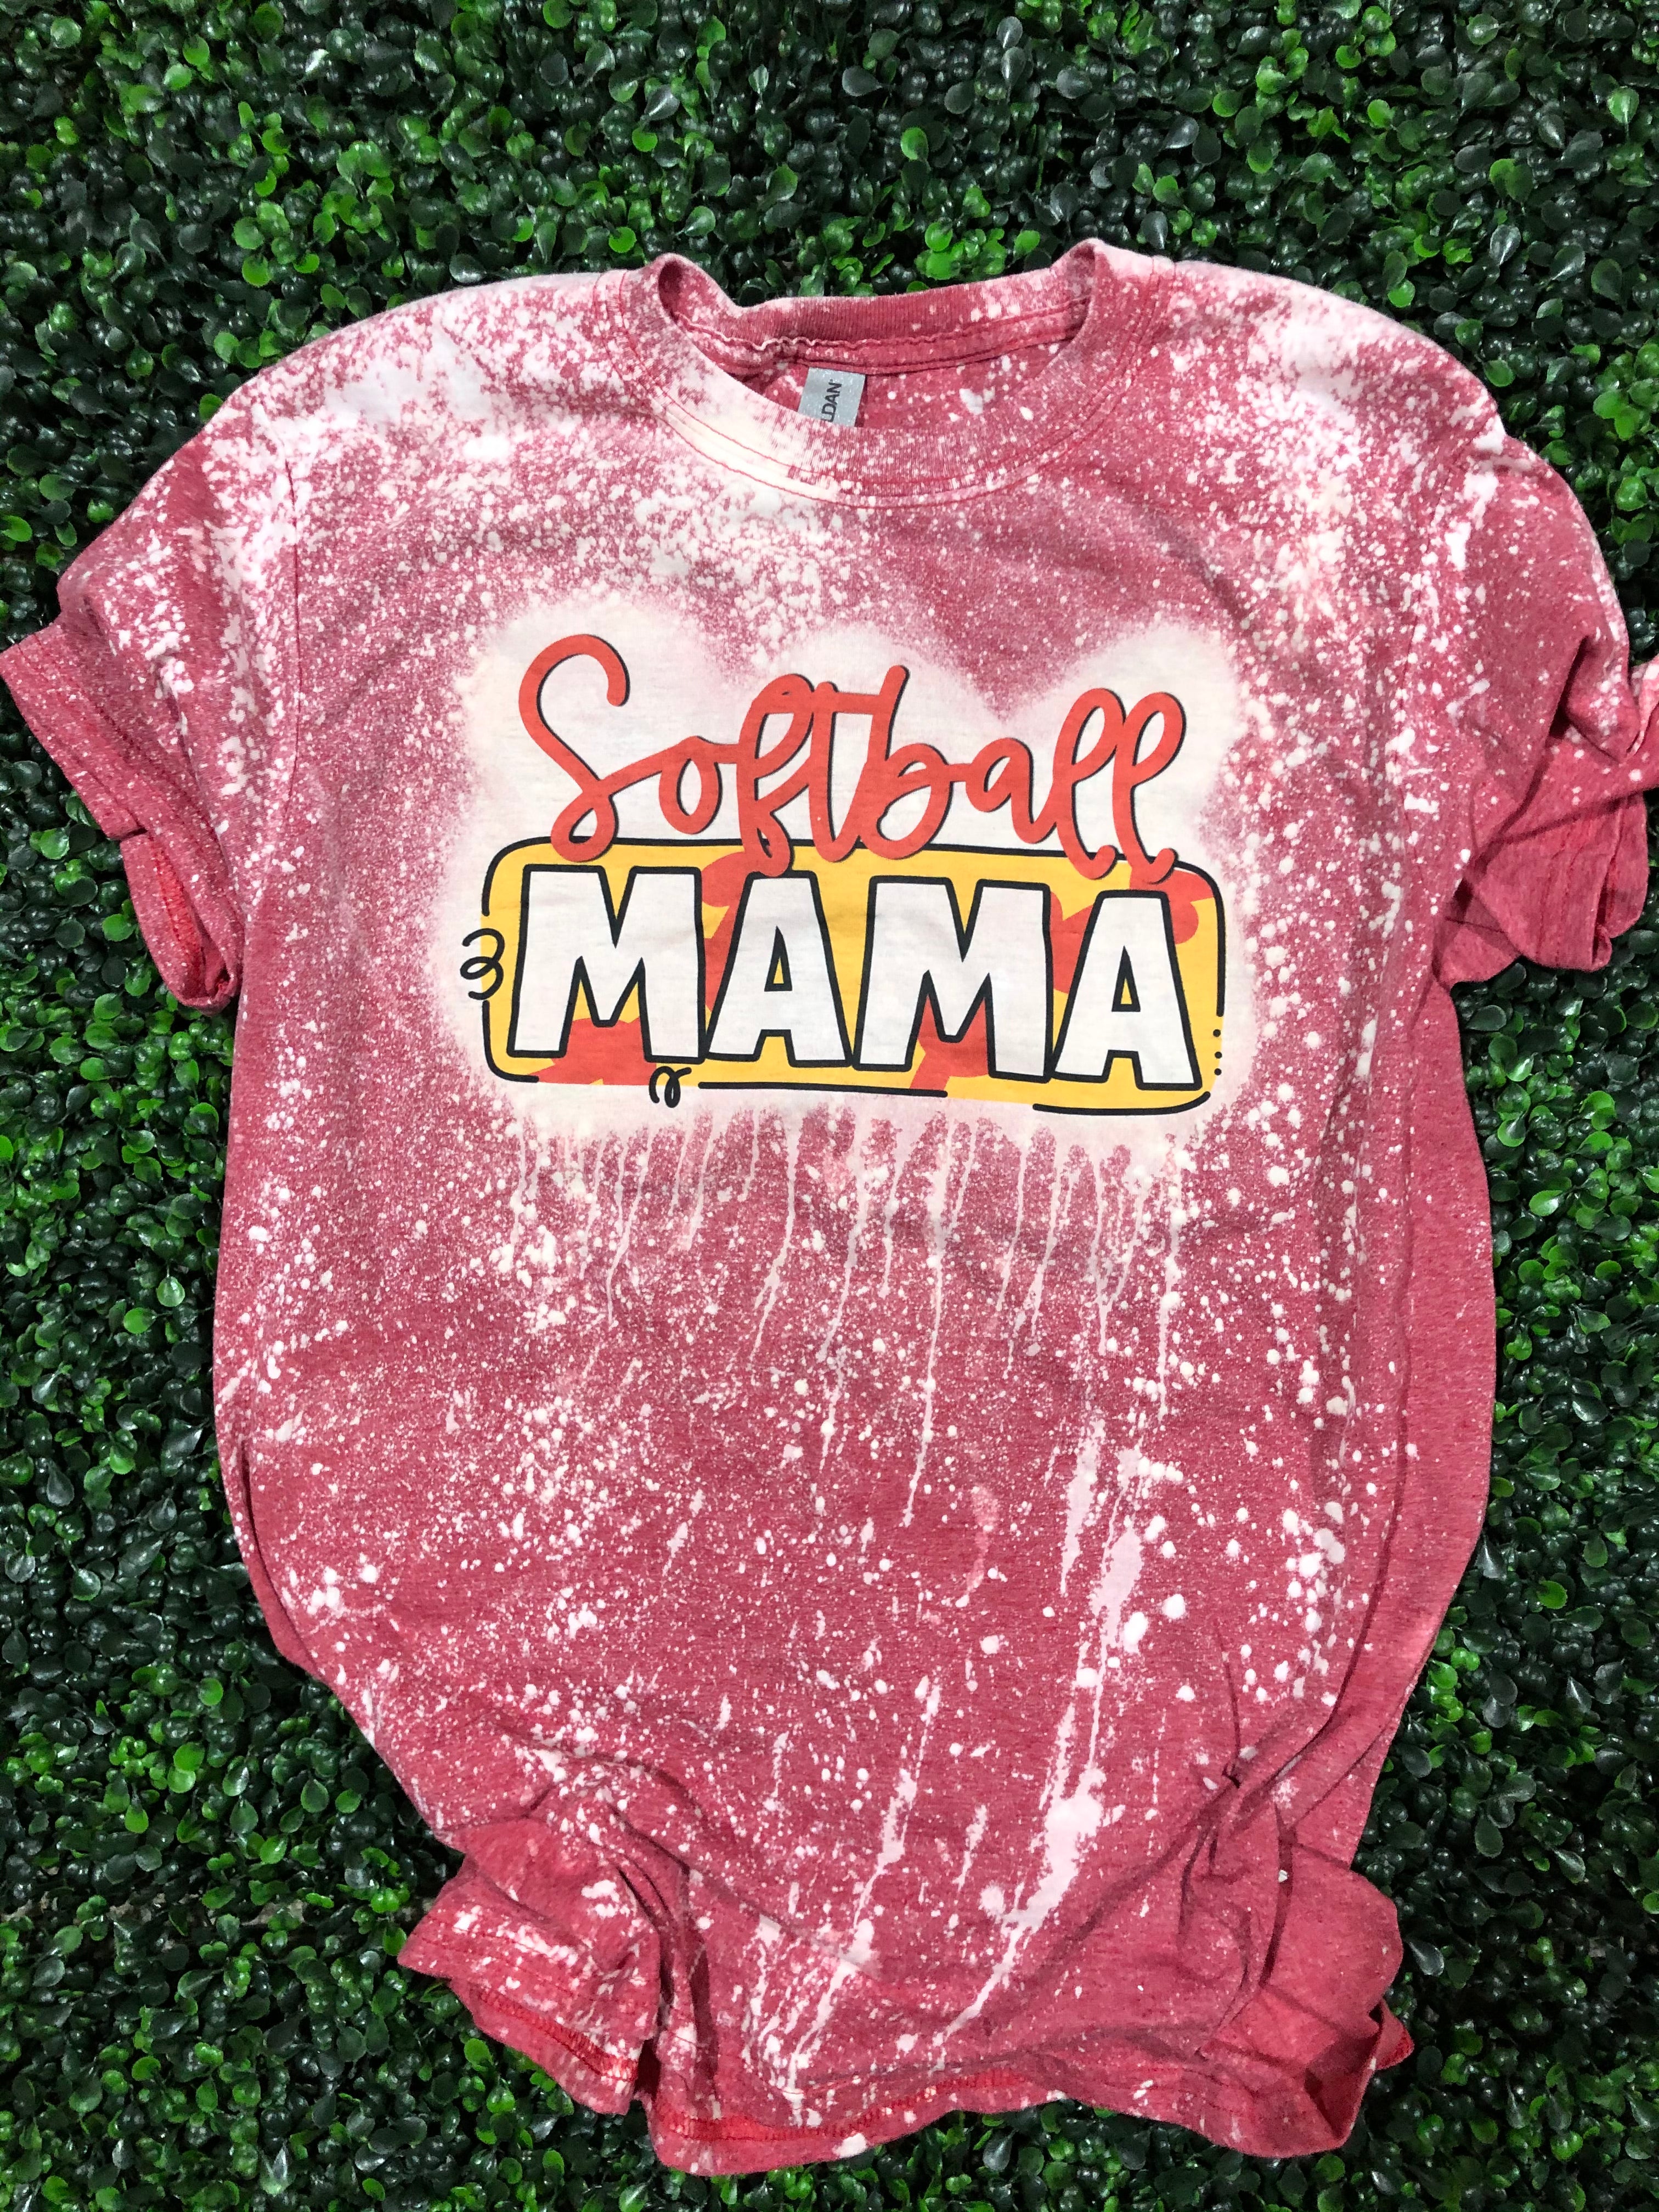 Softball Mama Top Design